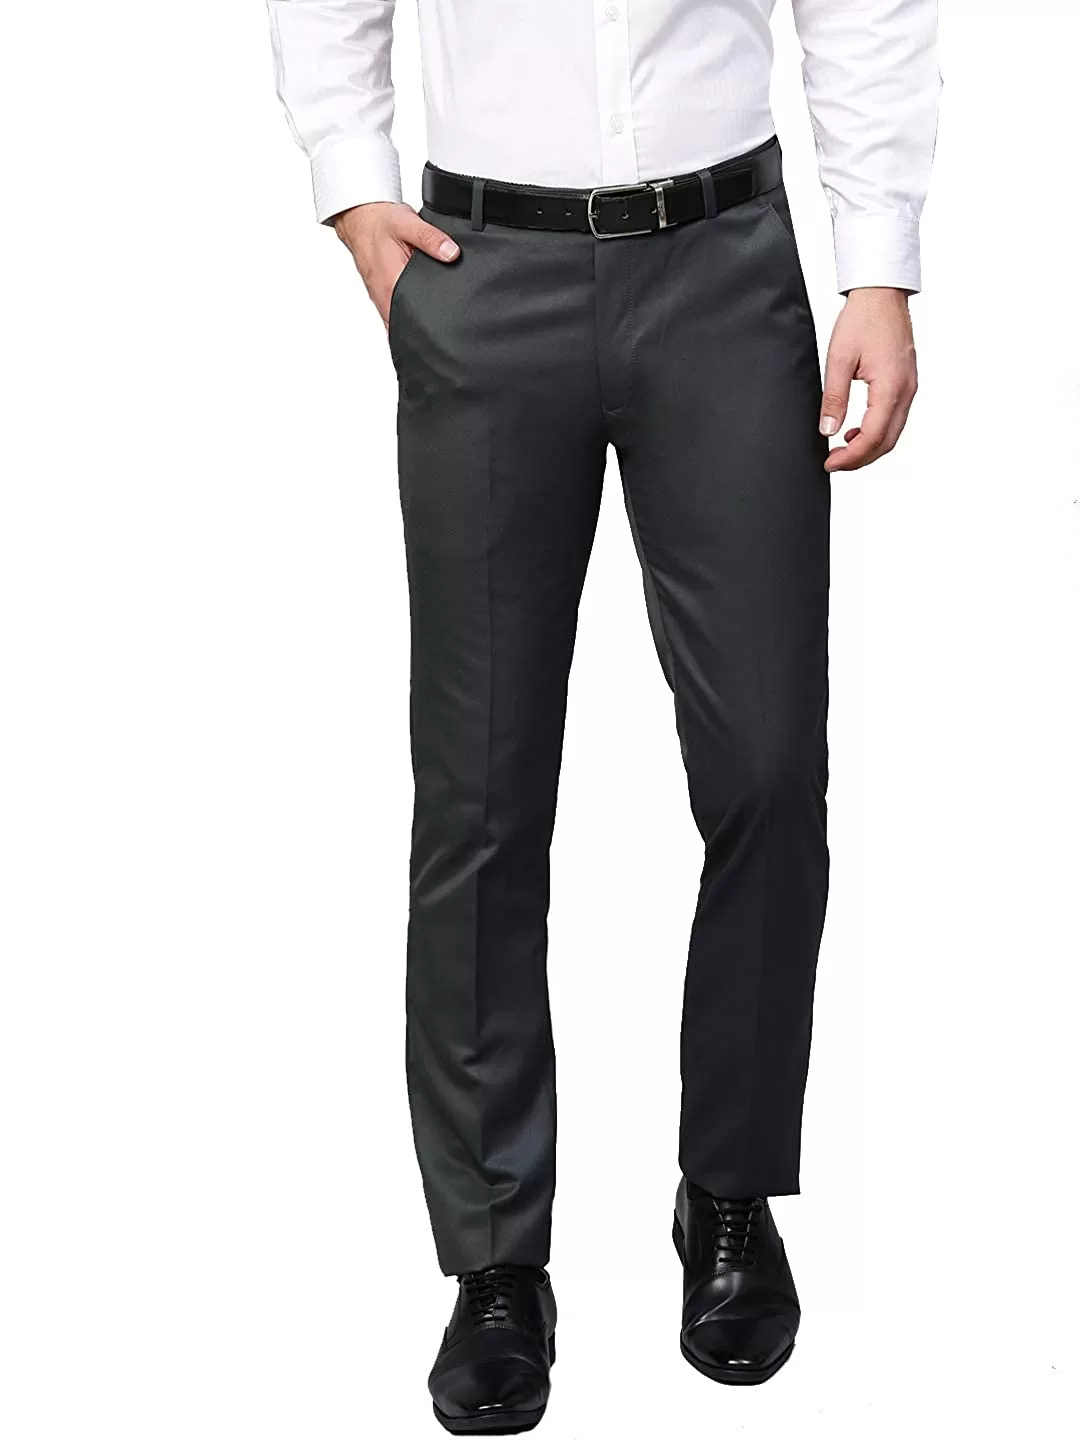 Buy Devil Men's Open Cotton Slim fit Cargo Trouser Pant 6 Pocket (Black,  32) at Amazon.in